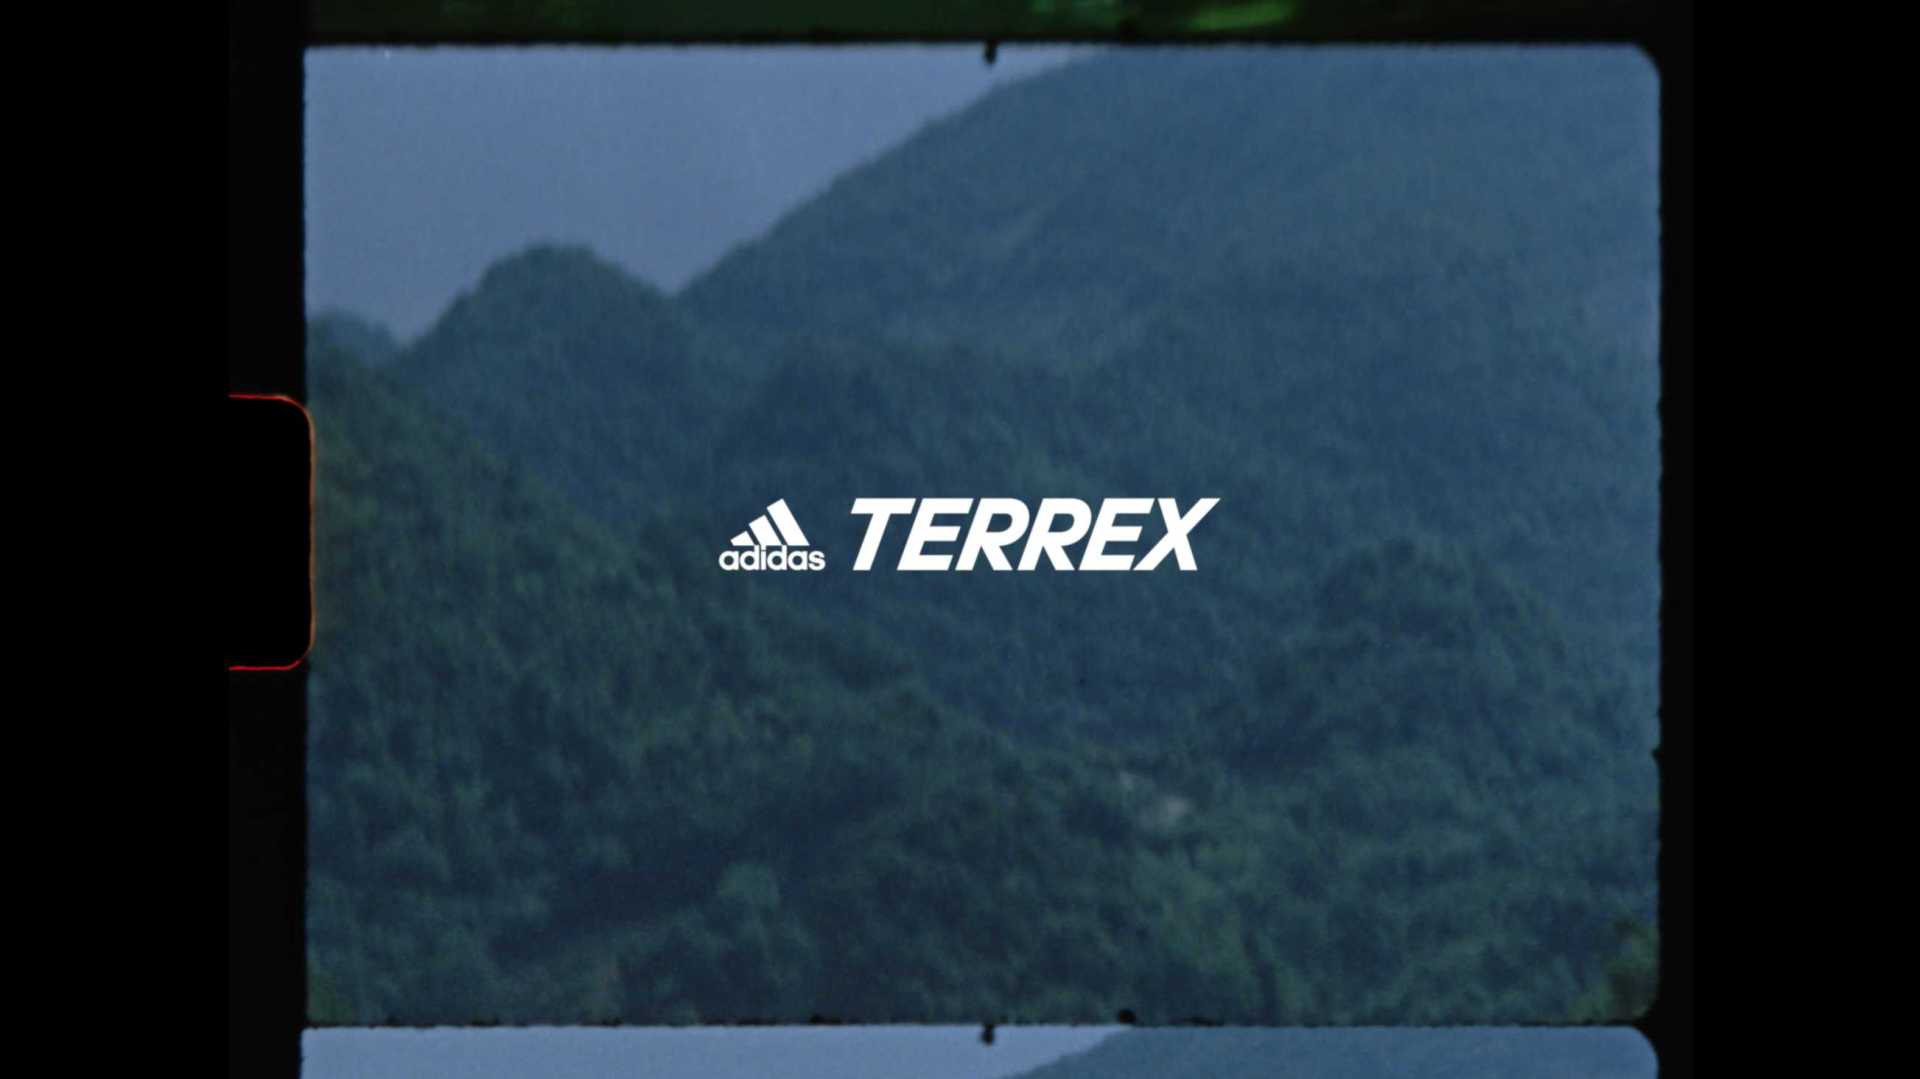 adidas TERREX X 人力探险家-徐江军